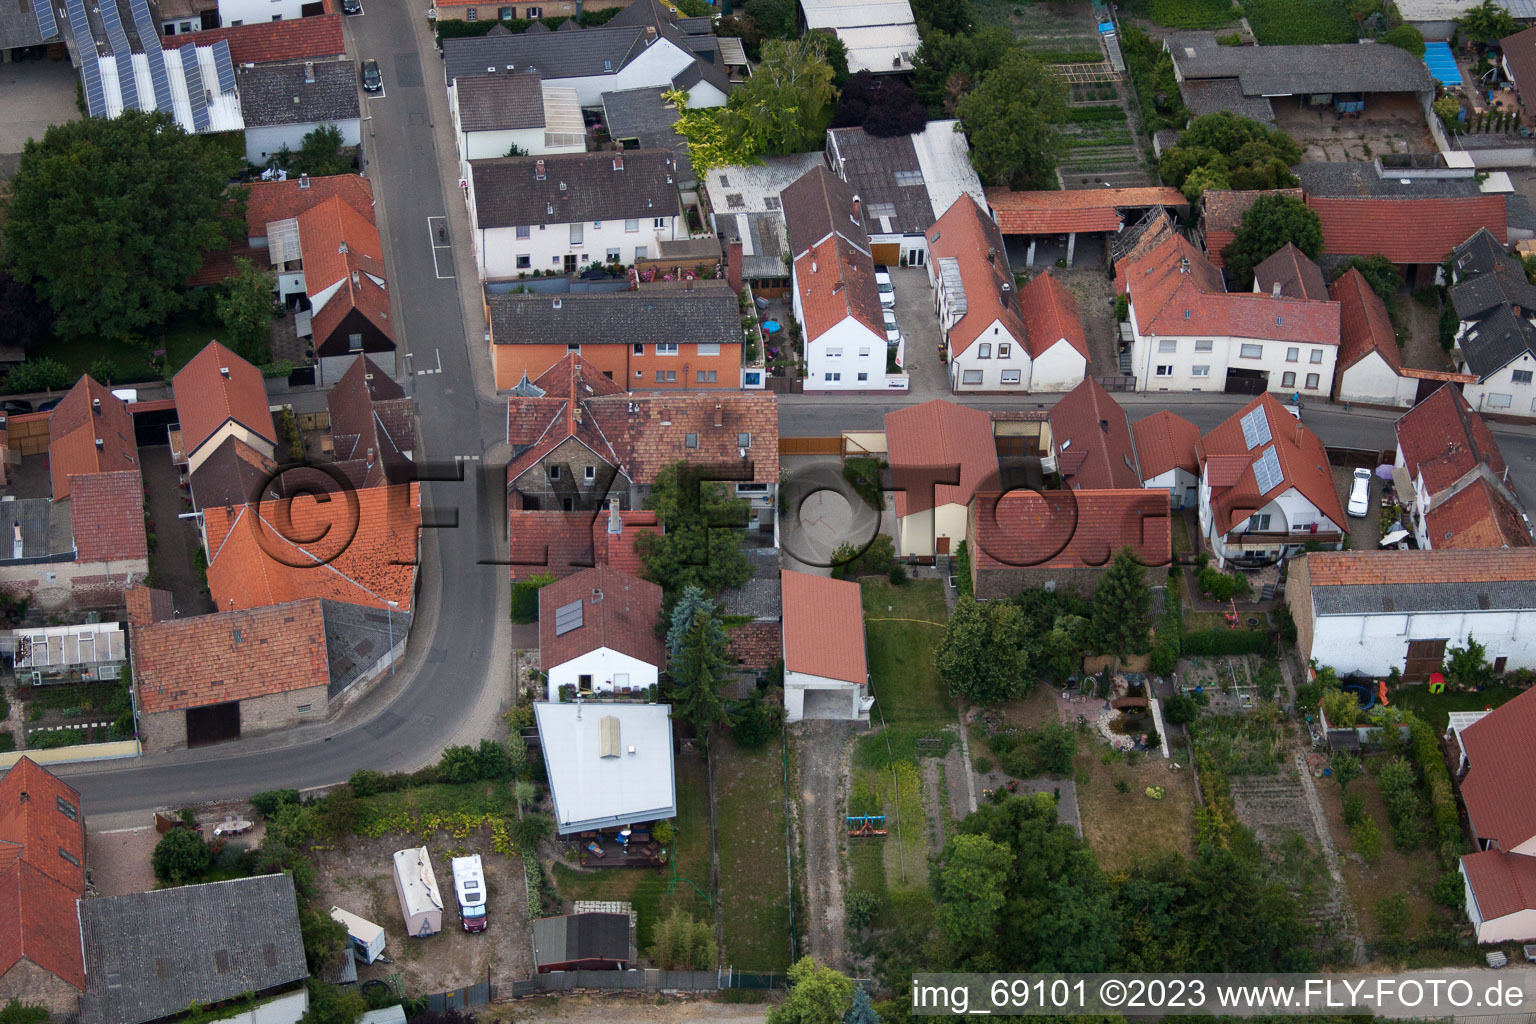 District Bobenheim in Bobenheim-Roxheim in the state Rhineland-Palatinate, Germany from a drone